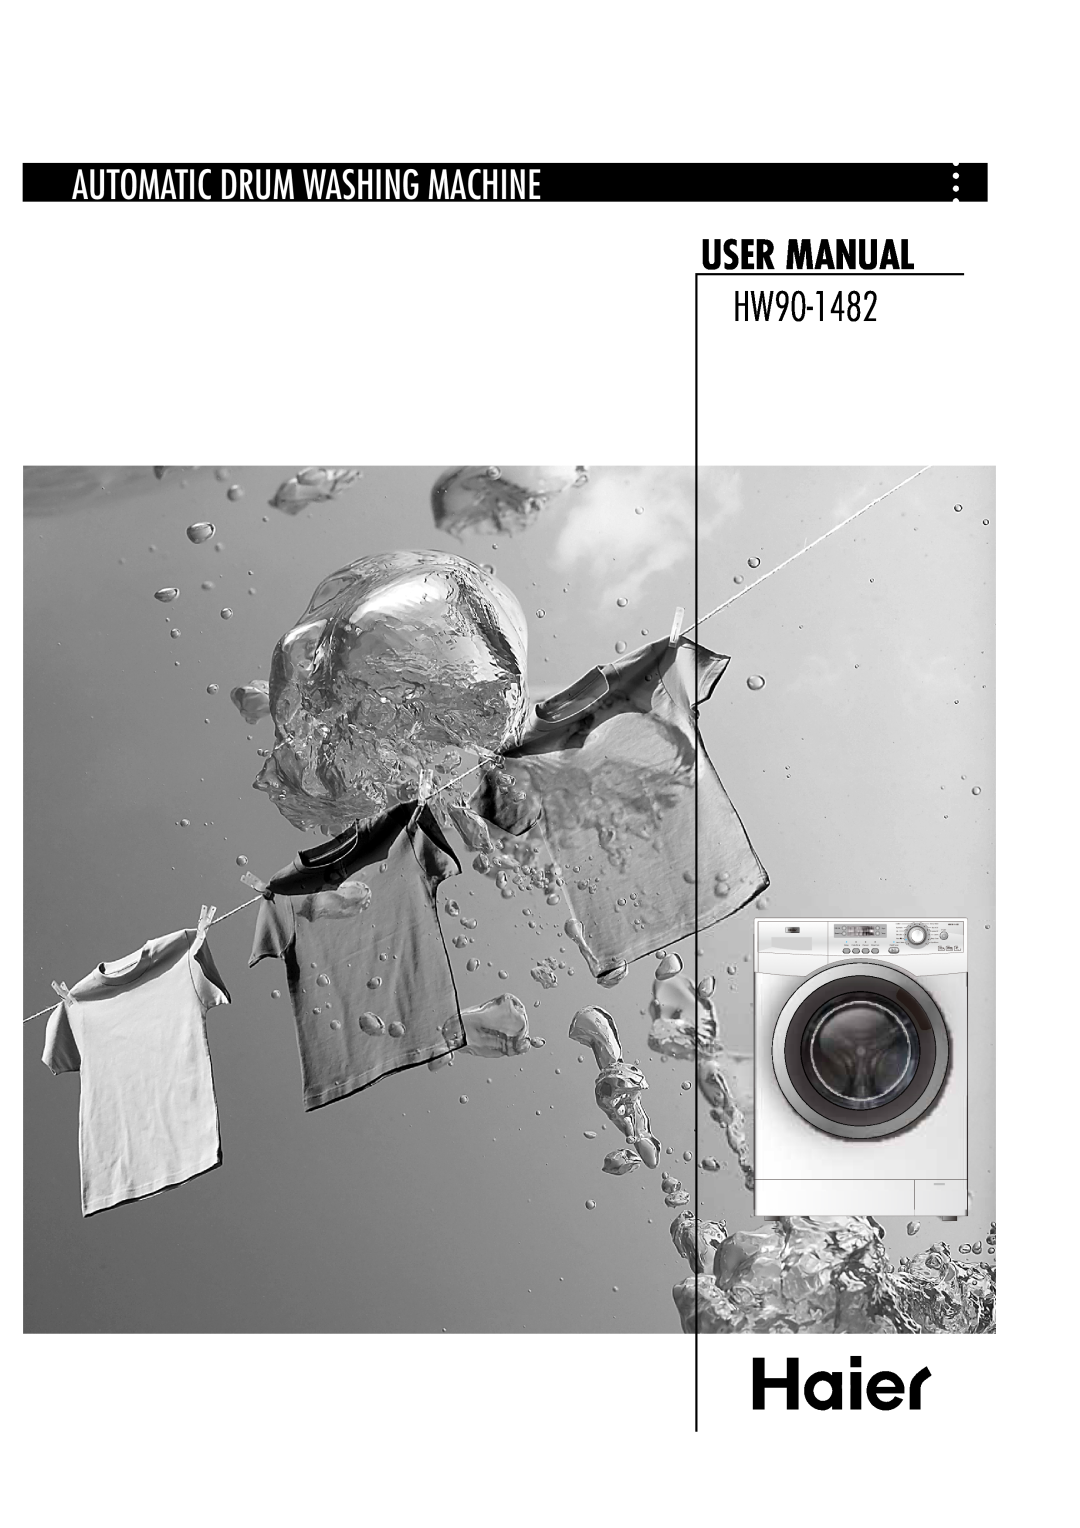 Haier Automatic Drum Washing Machine user manual User Manual, HW90-1482 